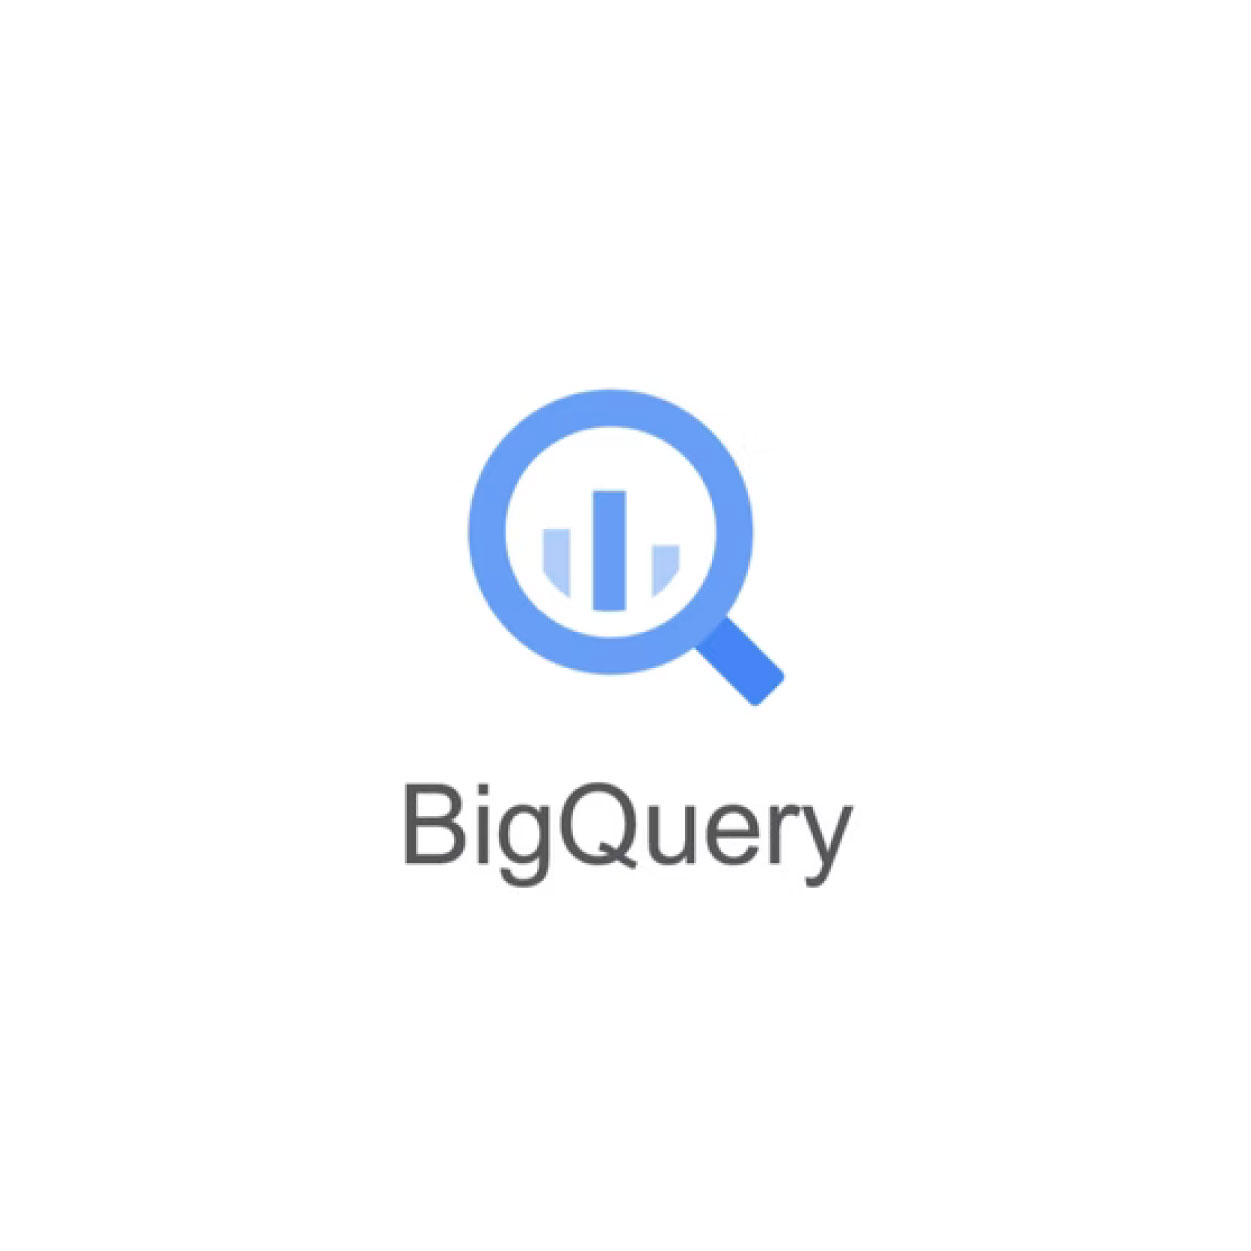 Google BigQuery logo